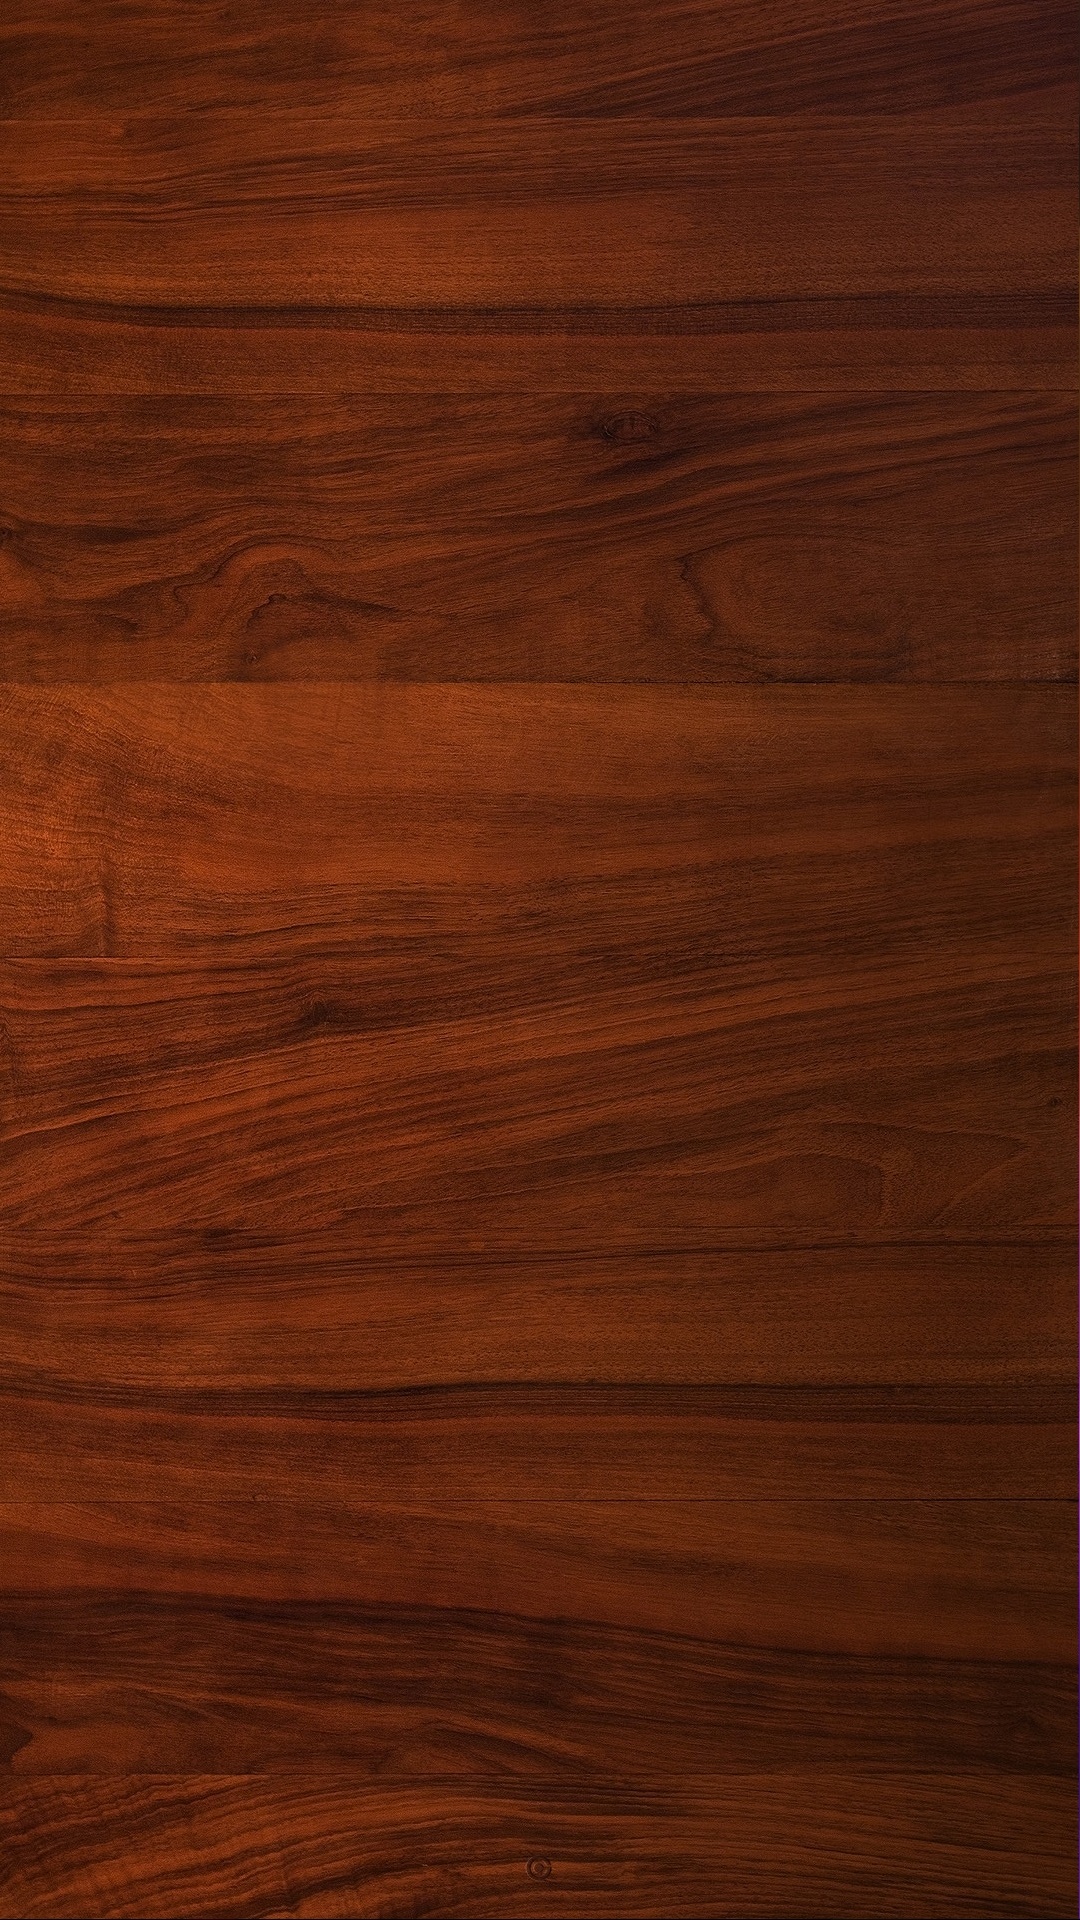 Wood grain android wallpaper | danasrhj.top